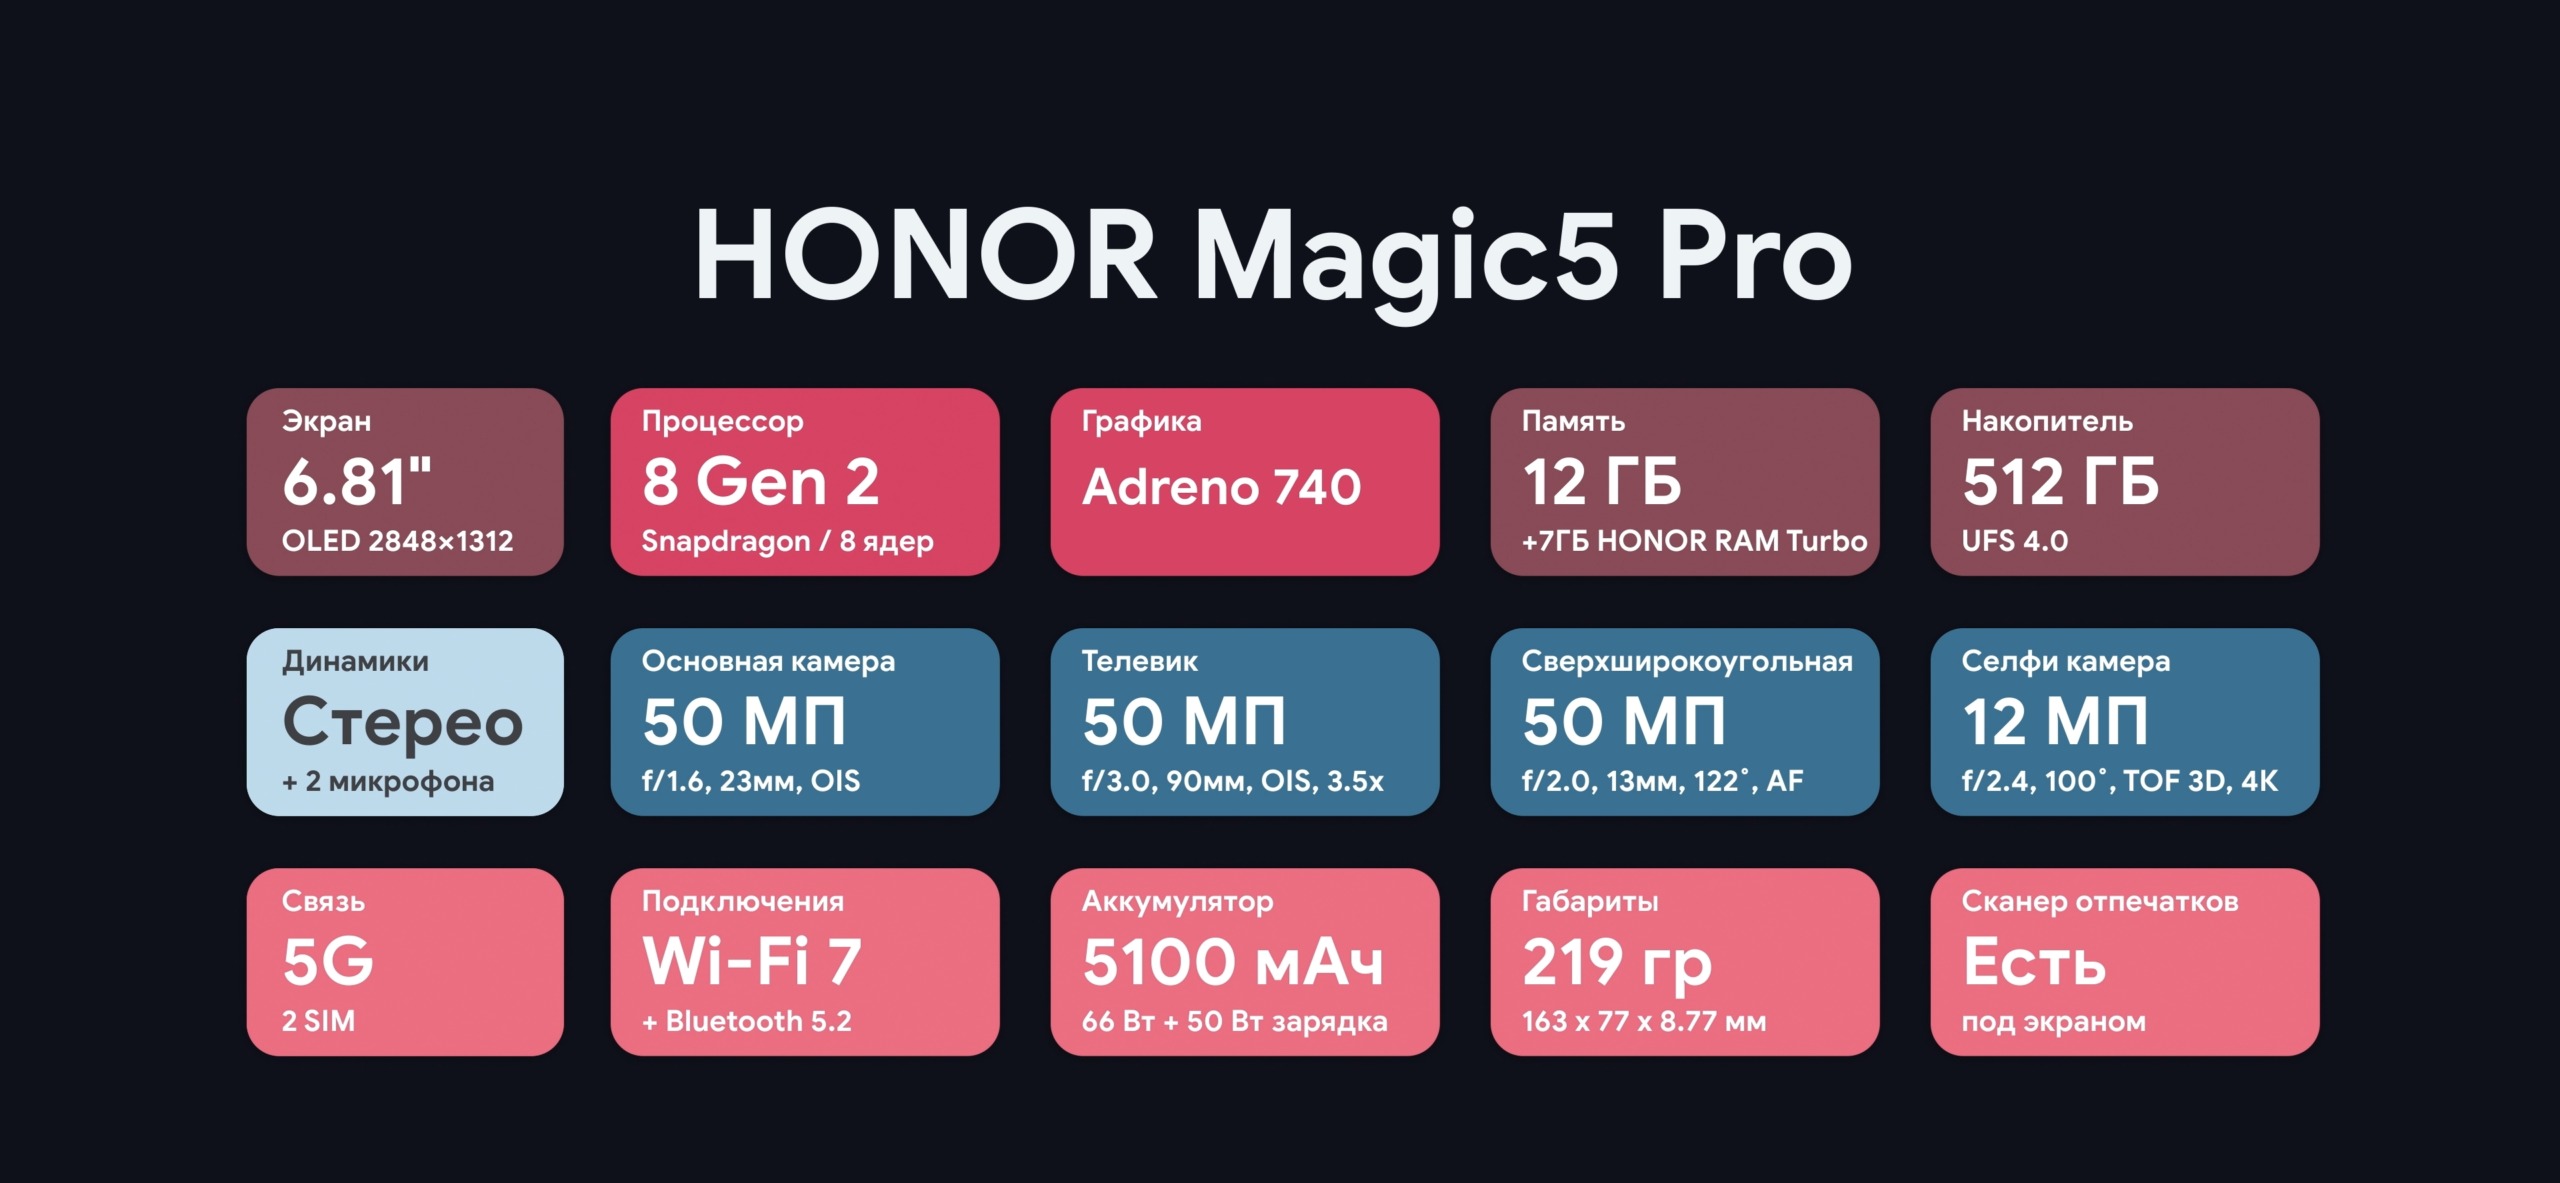 HONOR Magic5 Pro